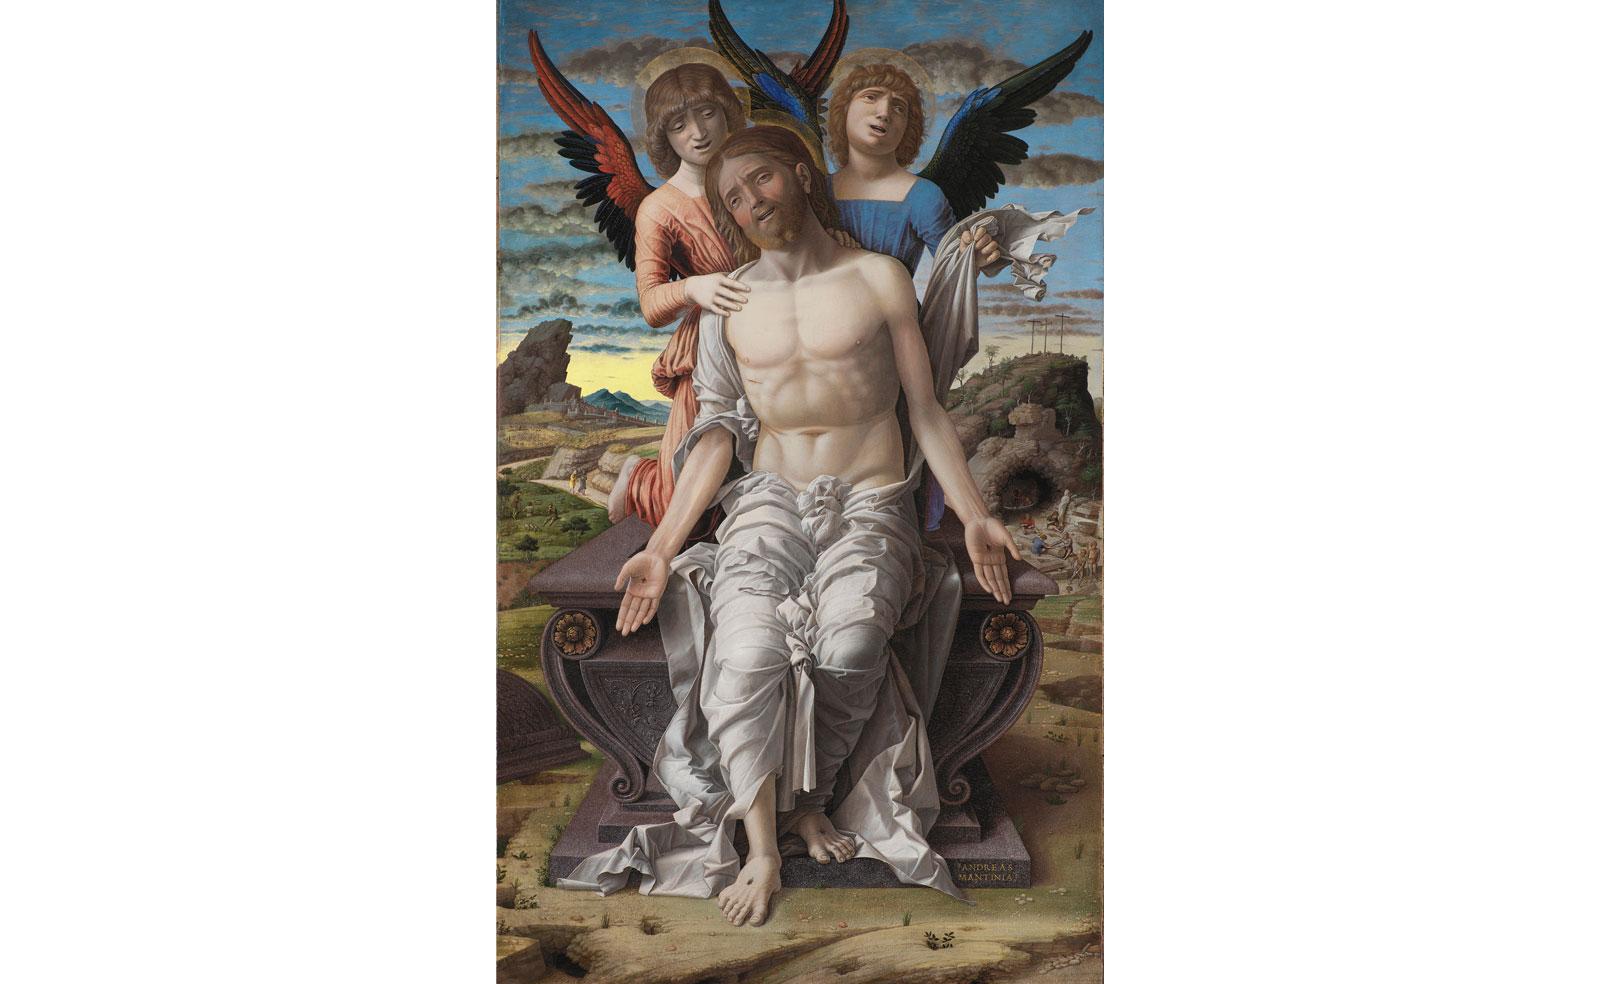 The Man of Sorrows by Andrea Mantegna.